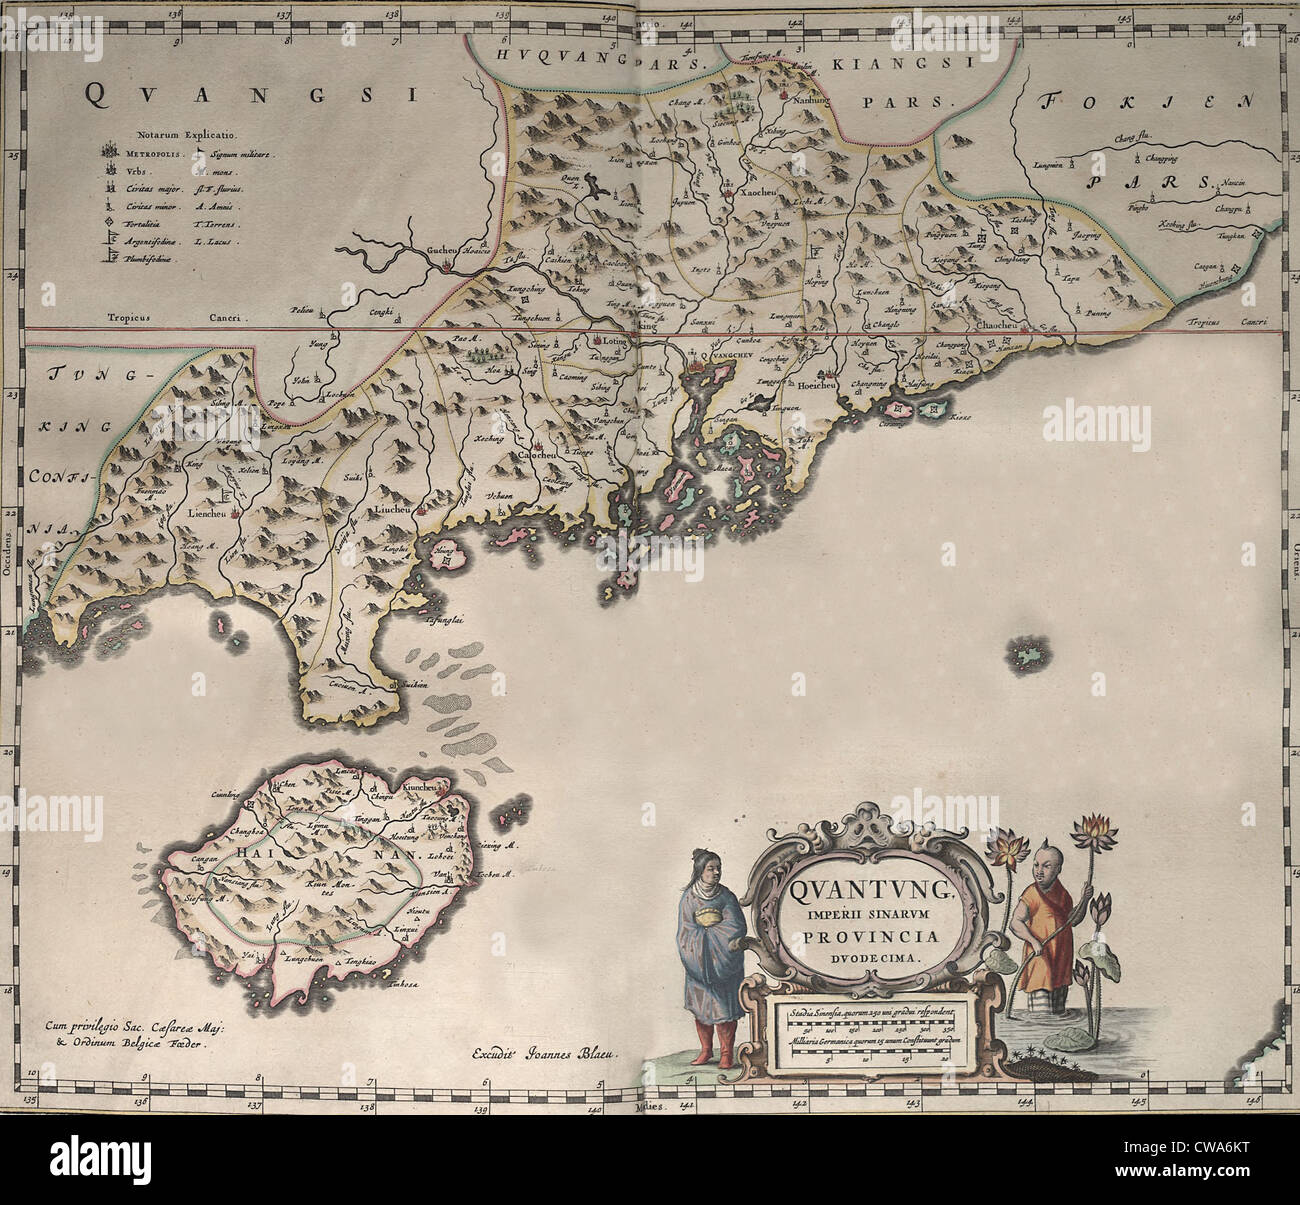 1655 map of South China coast by Martino Martini. Stock Photo